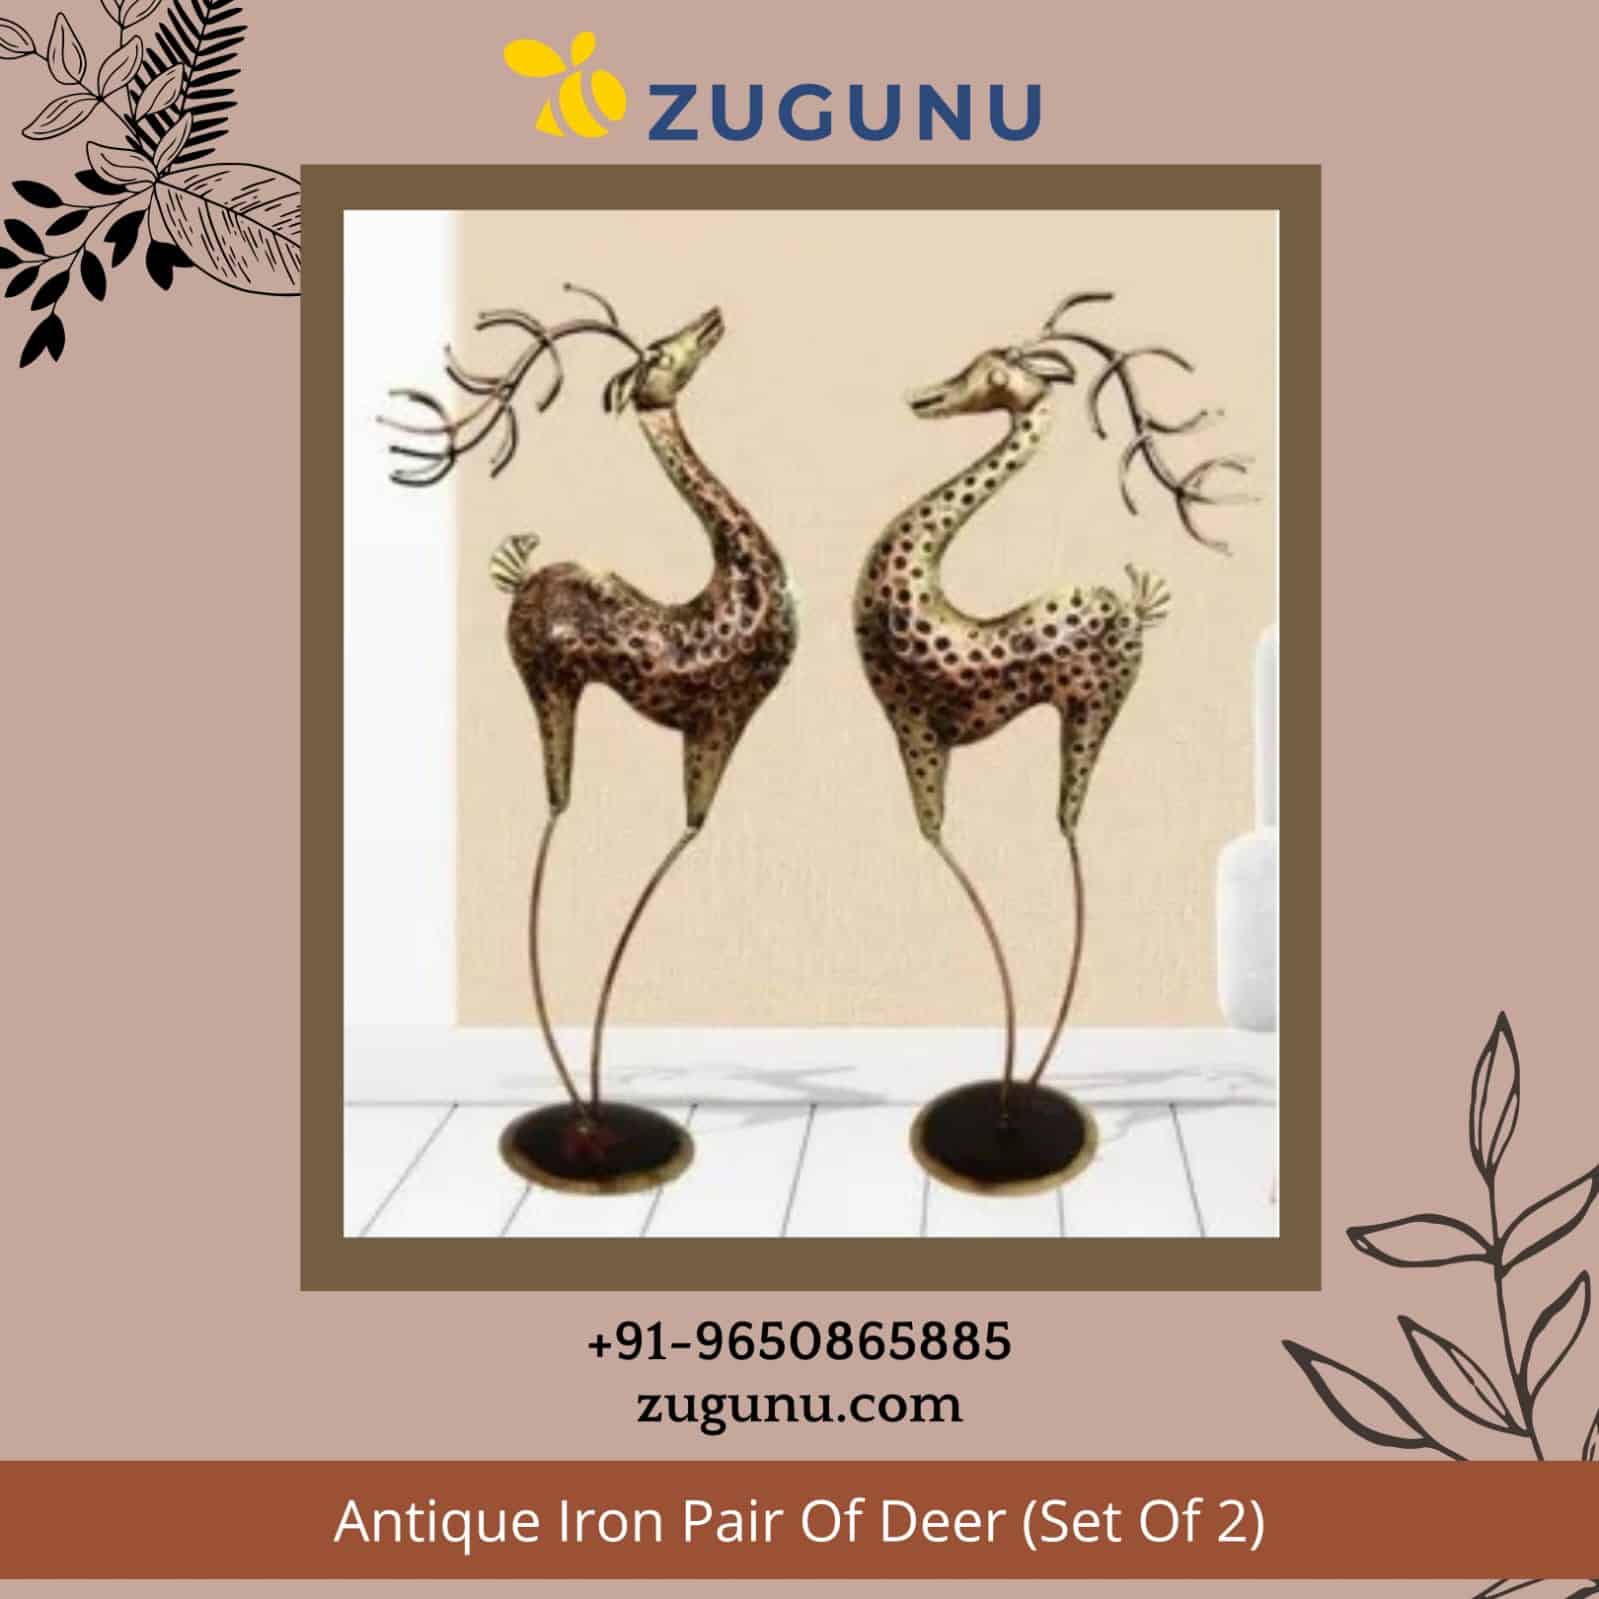 Antique Iron Pair Of Deer Set Of 2 Zugunu